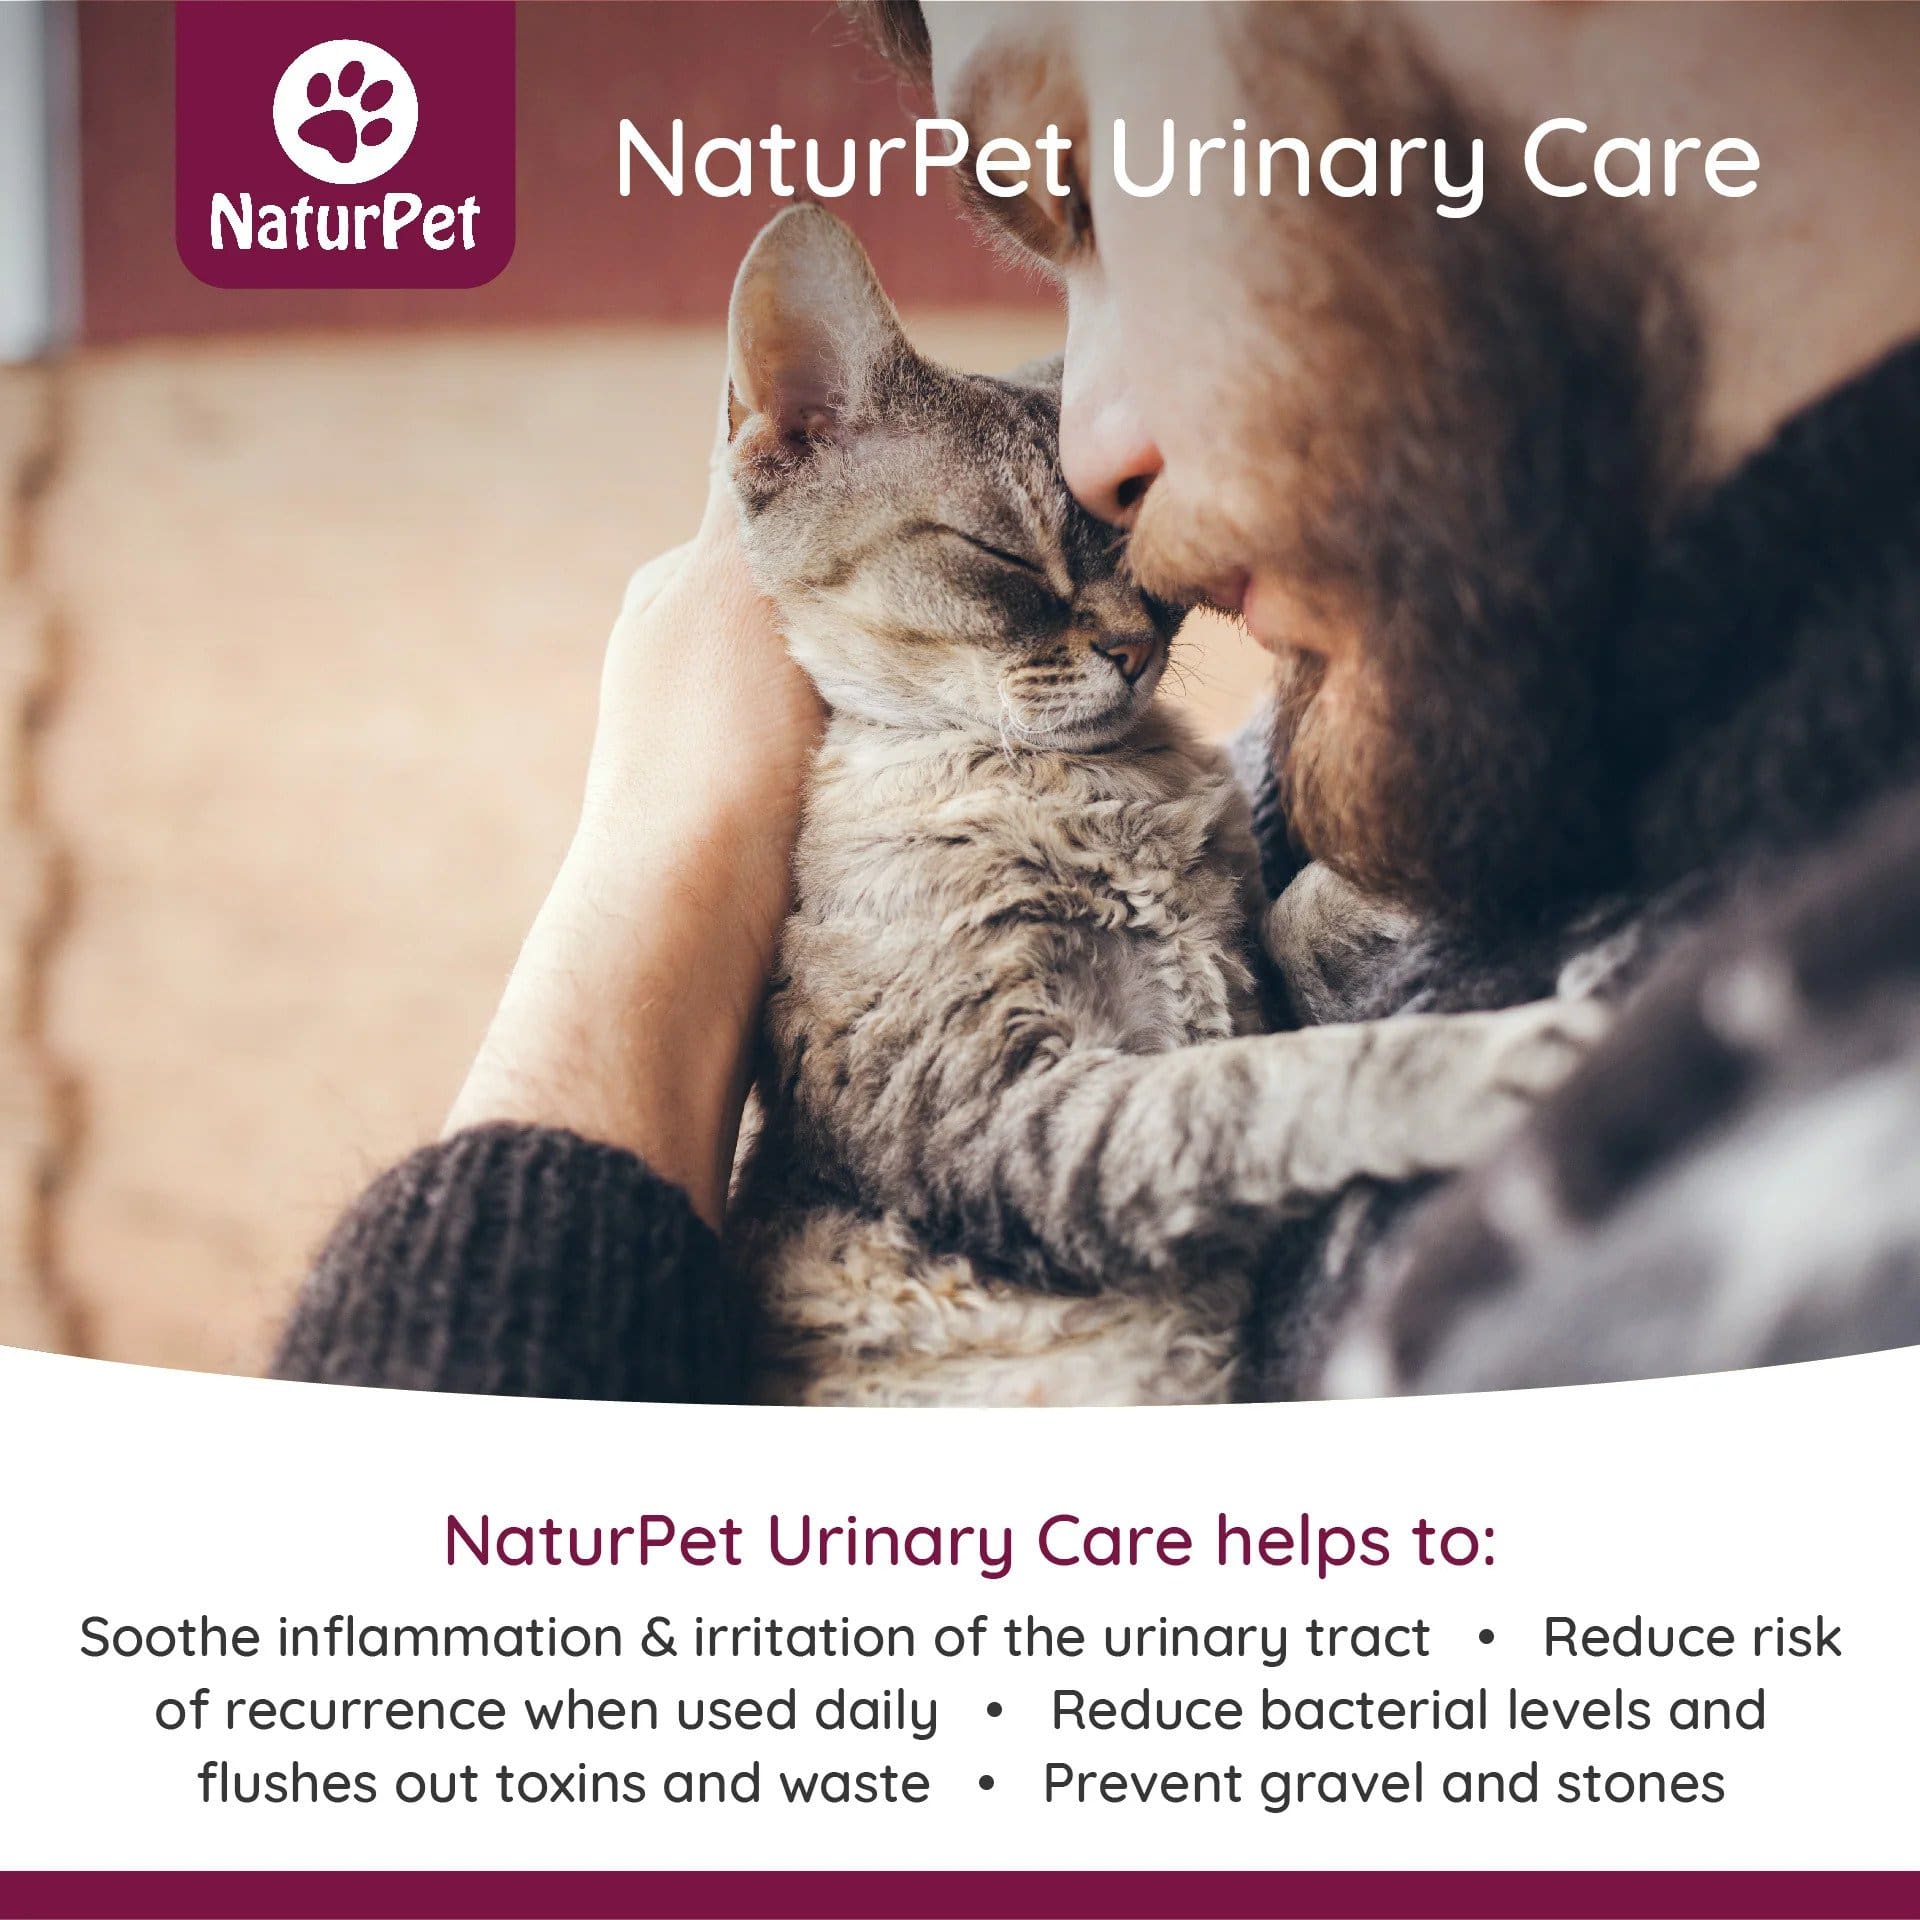 NaturPet Urinary Care Benefits